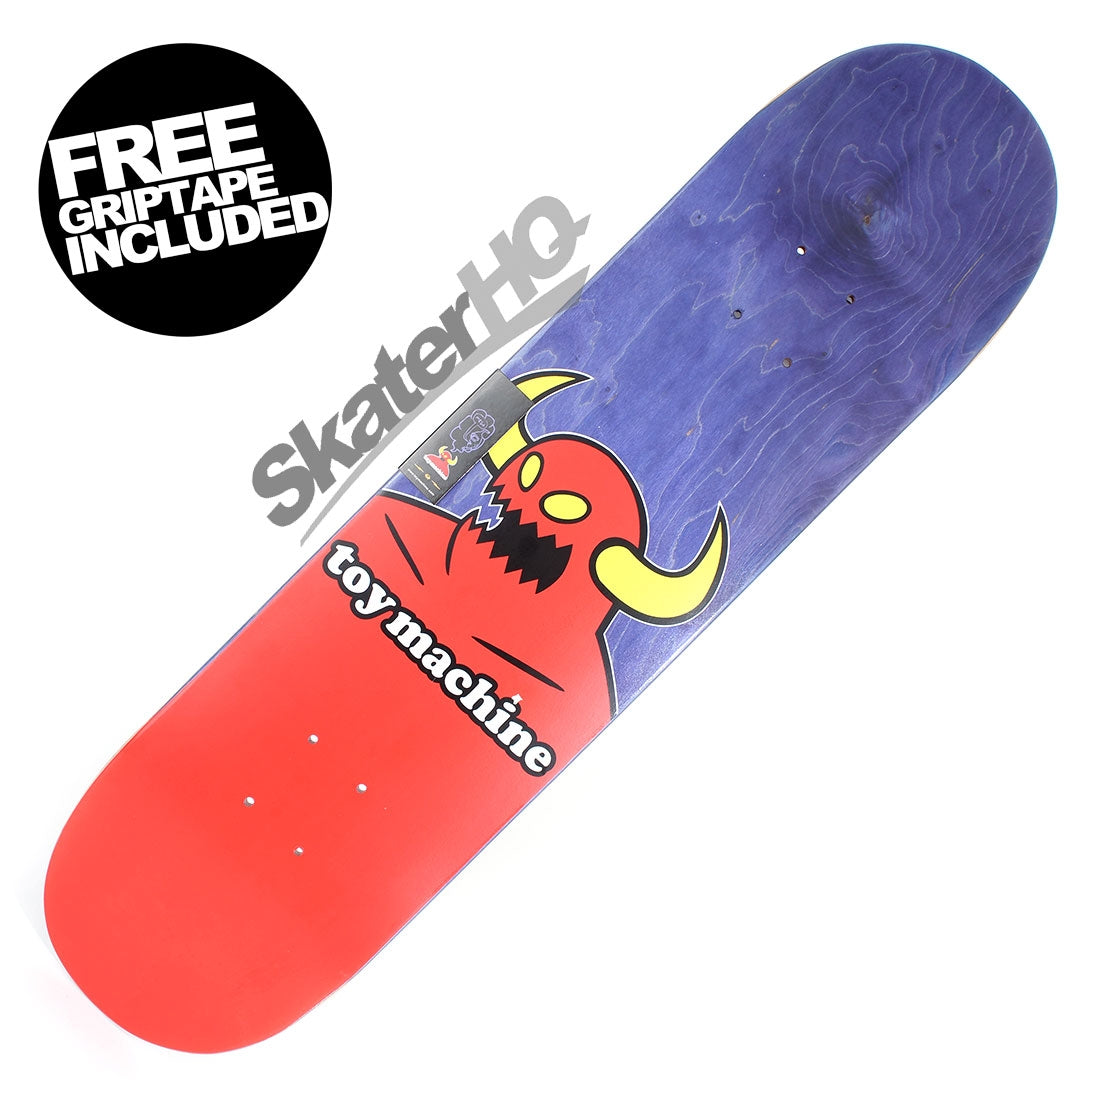 Toy Machine Monster 7.75 Deck - Blue Skateboard Decks Modern Street